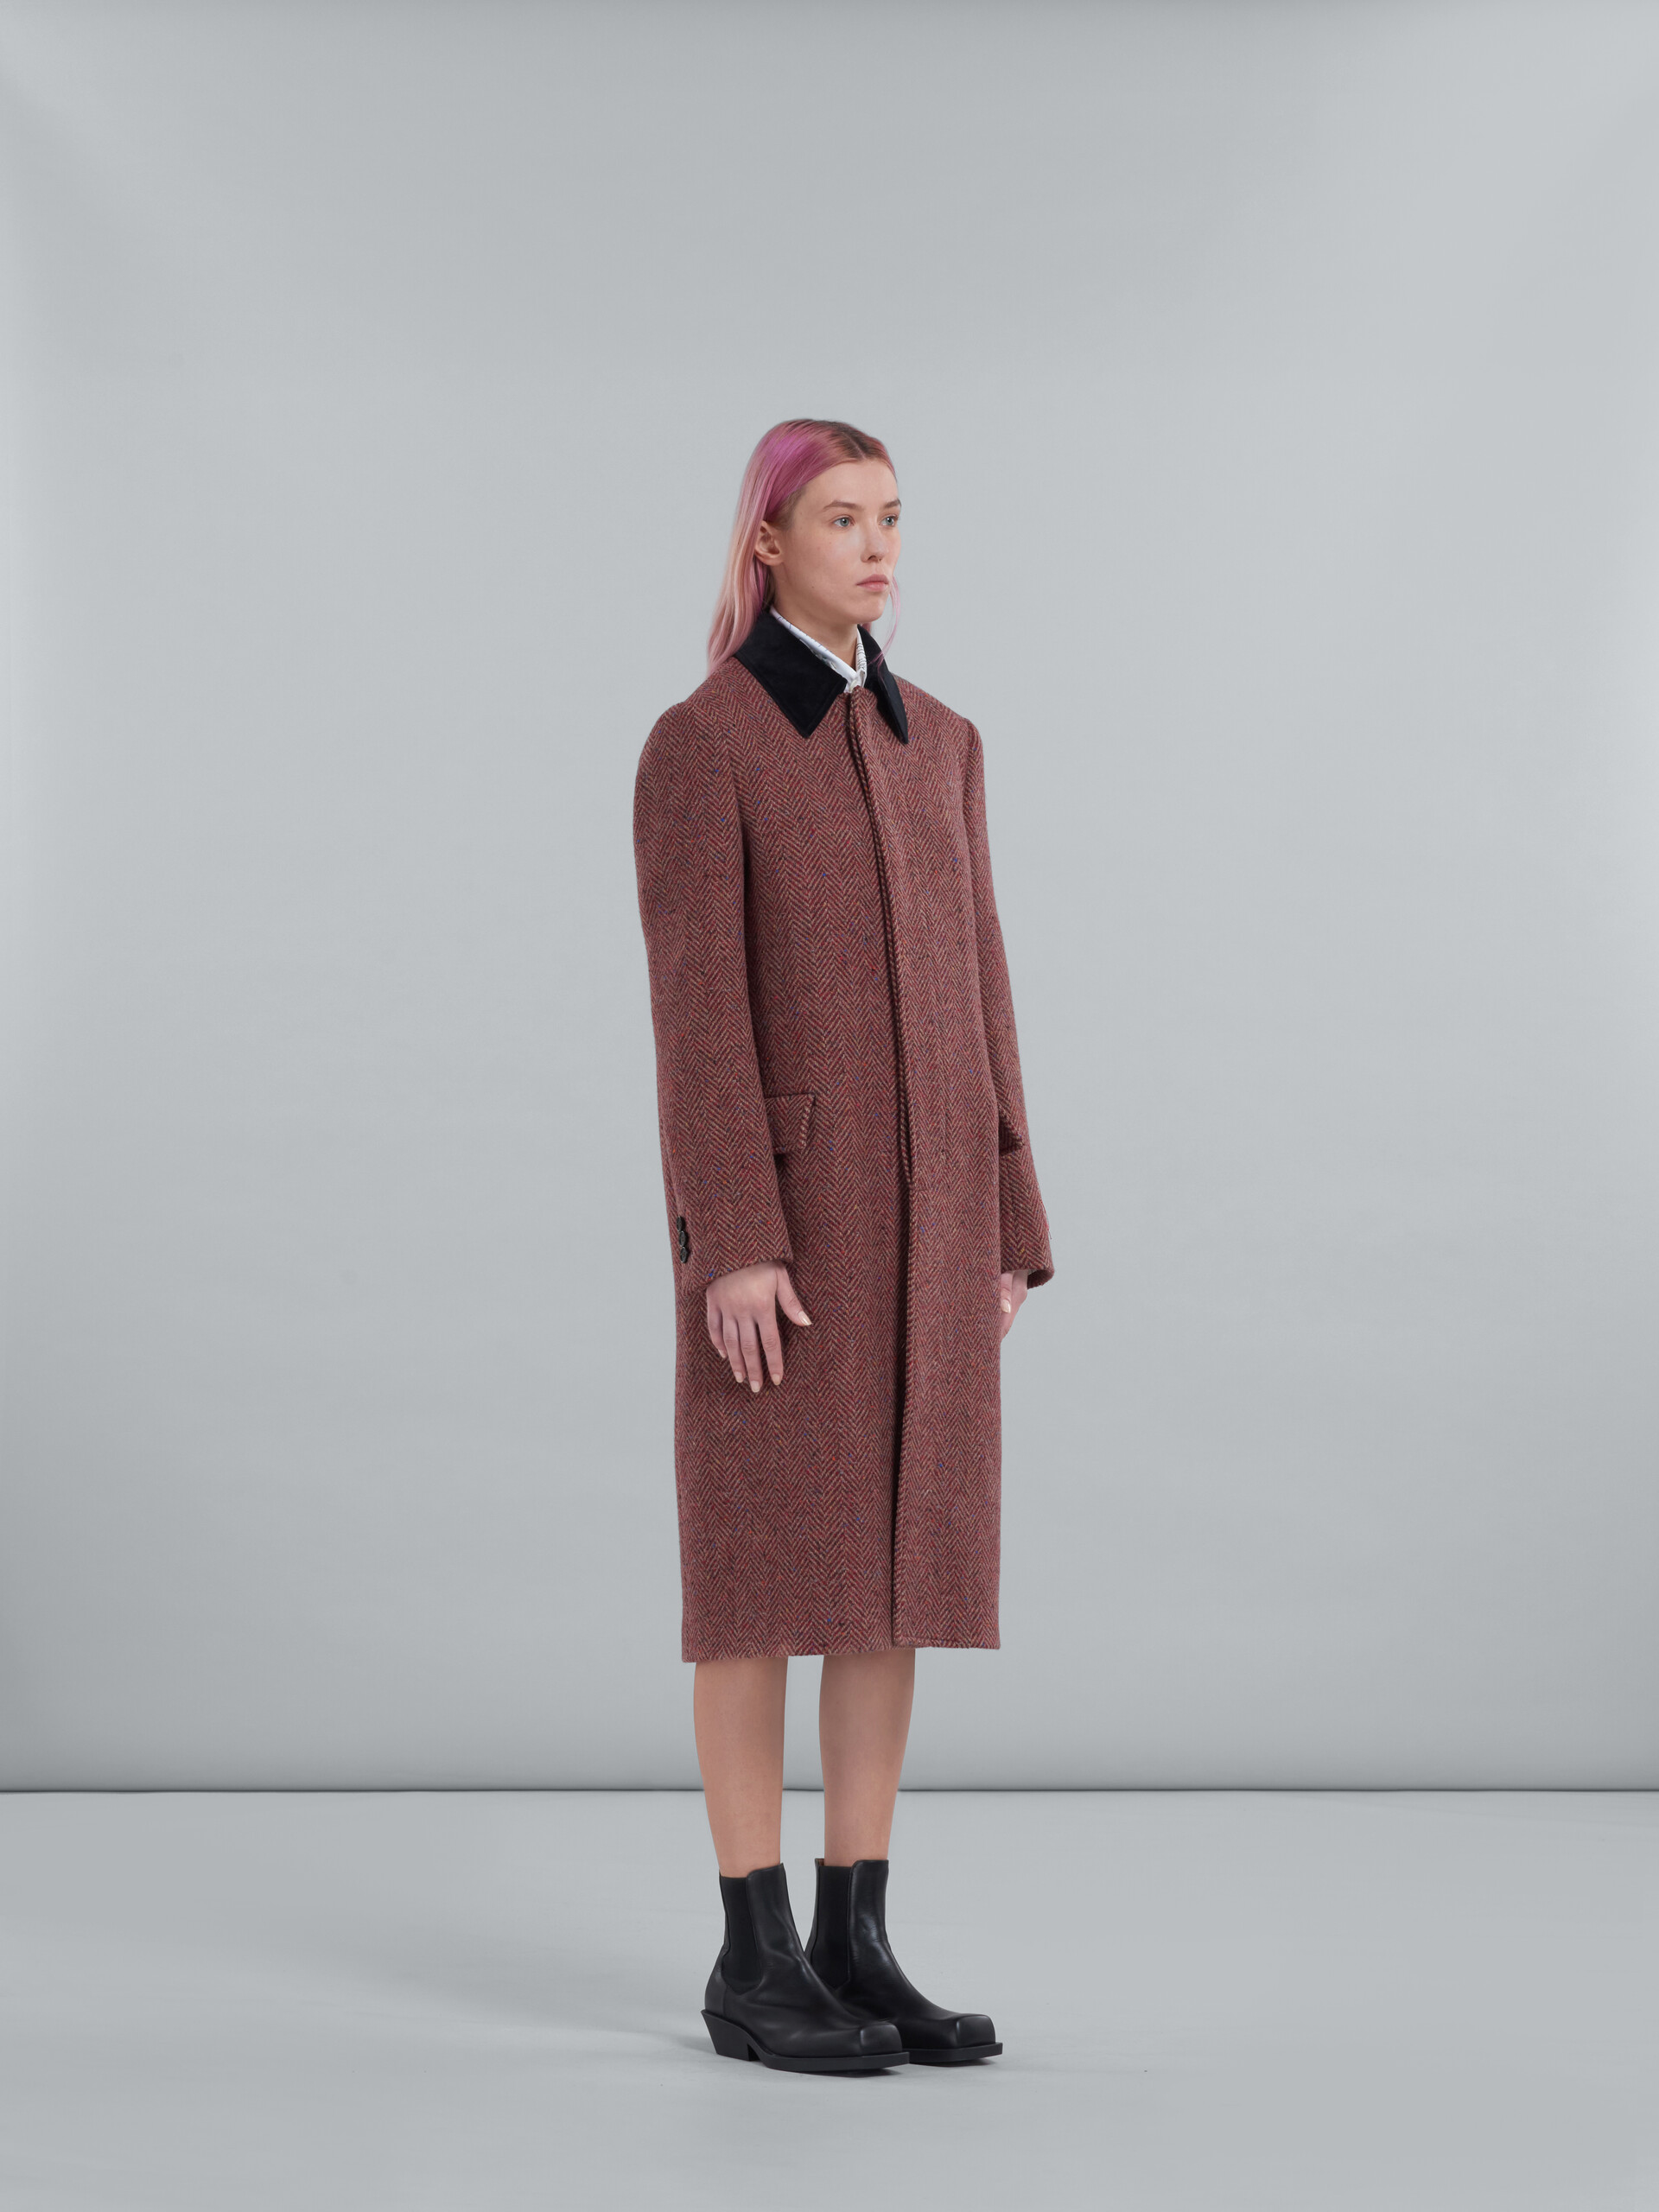 Burgundy chevron wool coat with velvet collar - Coat - Image 6